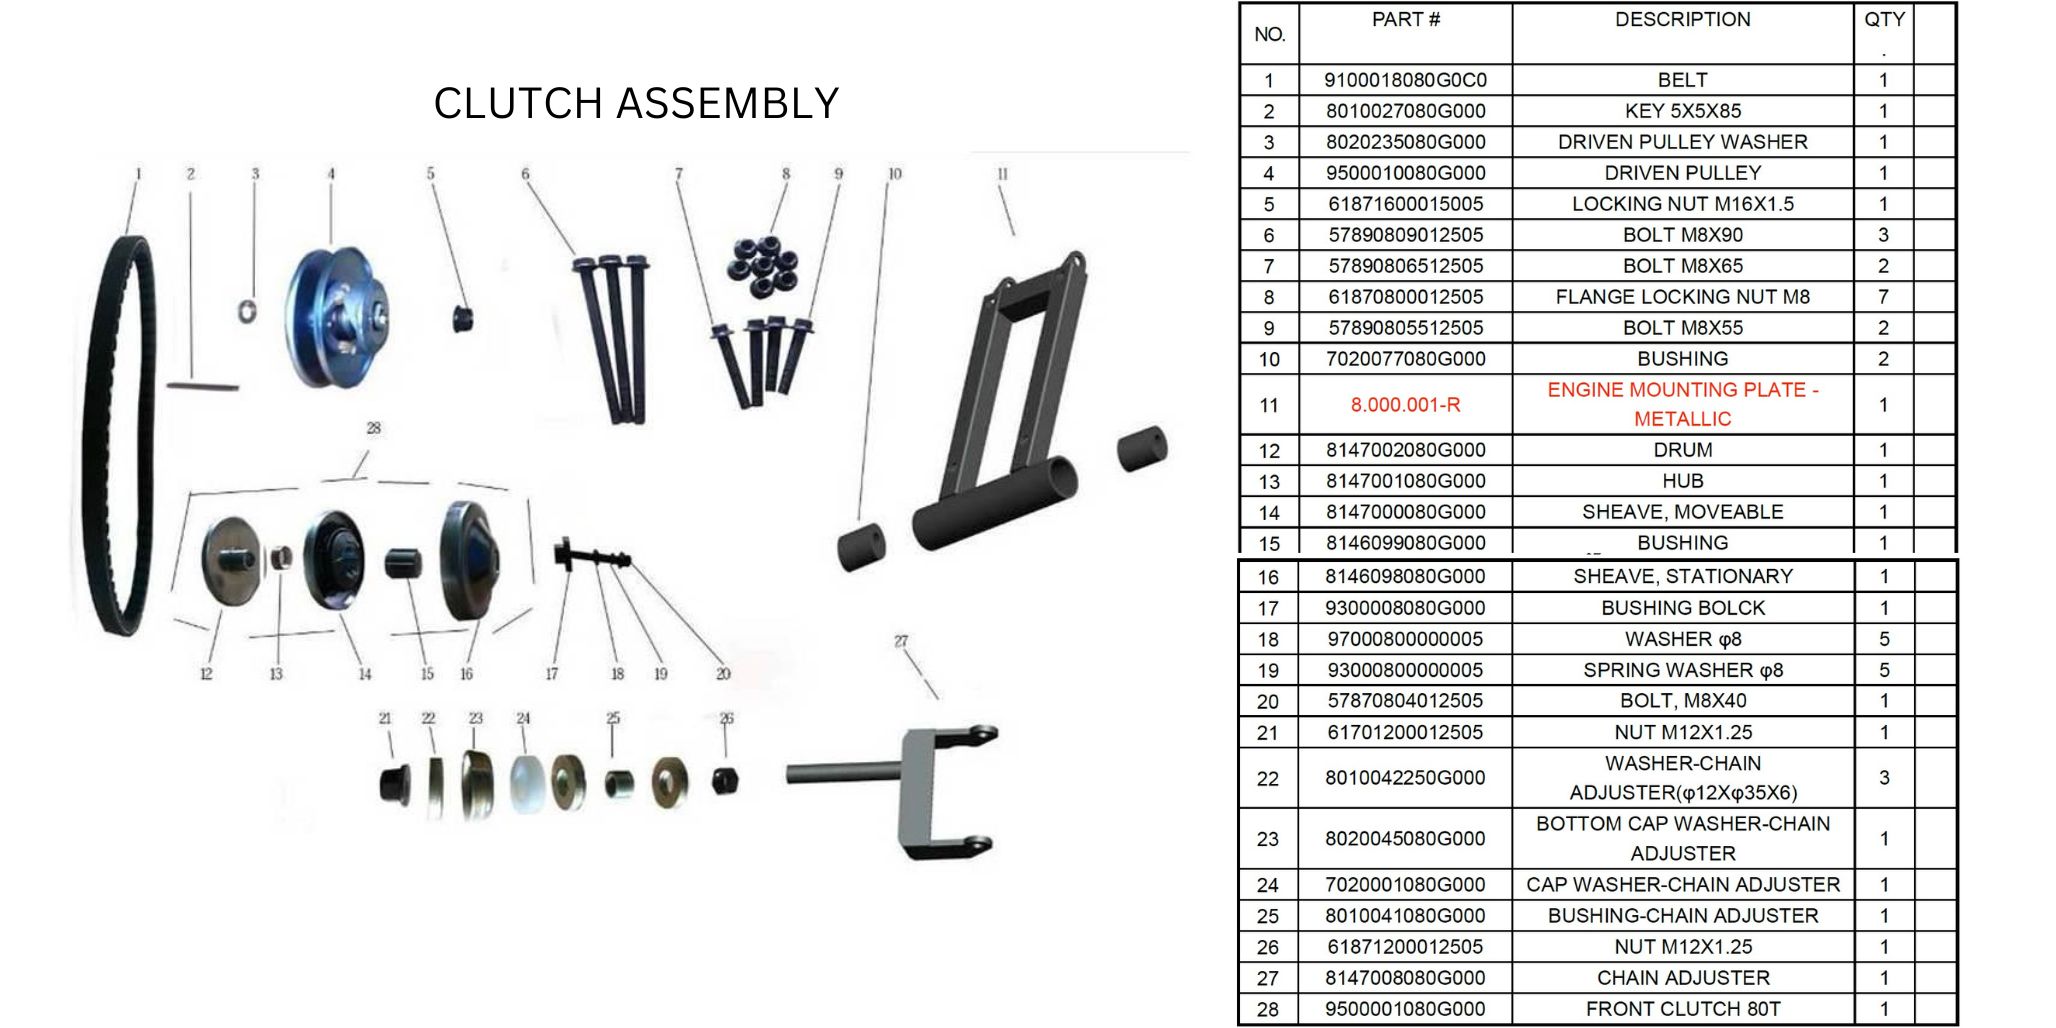 blazer200r-clutch-assembly.jpg